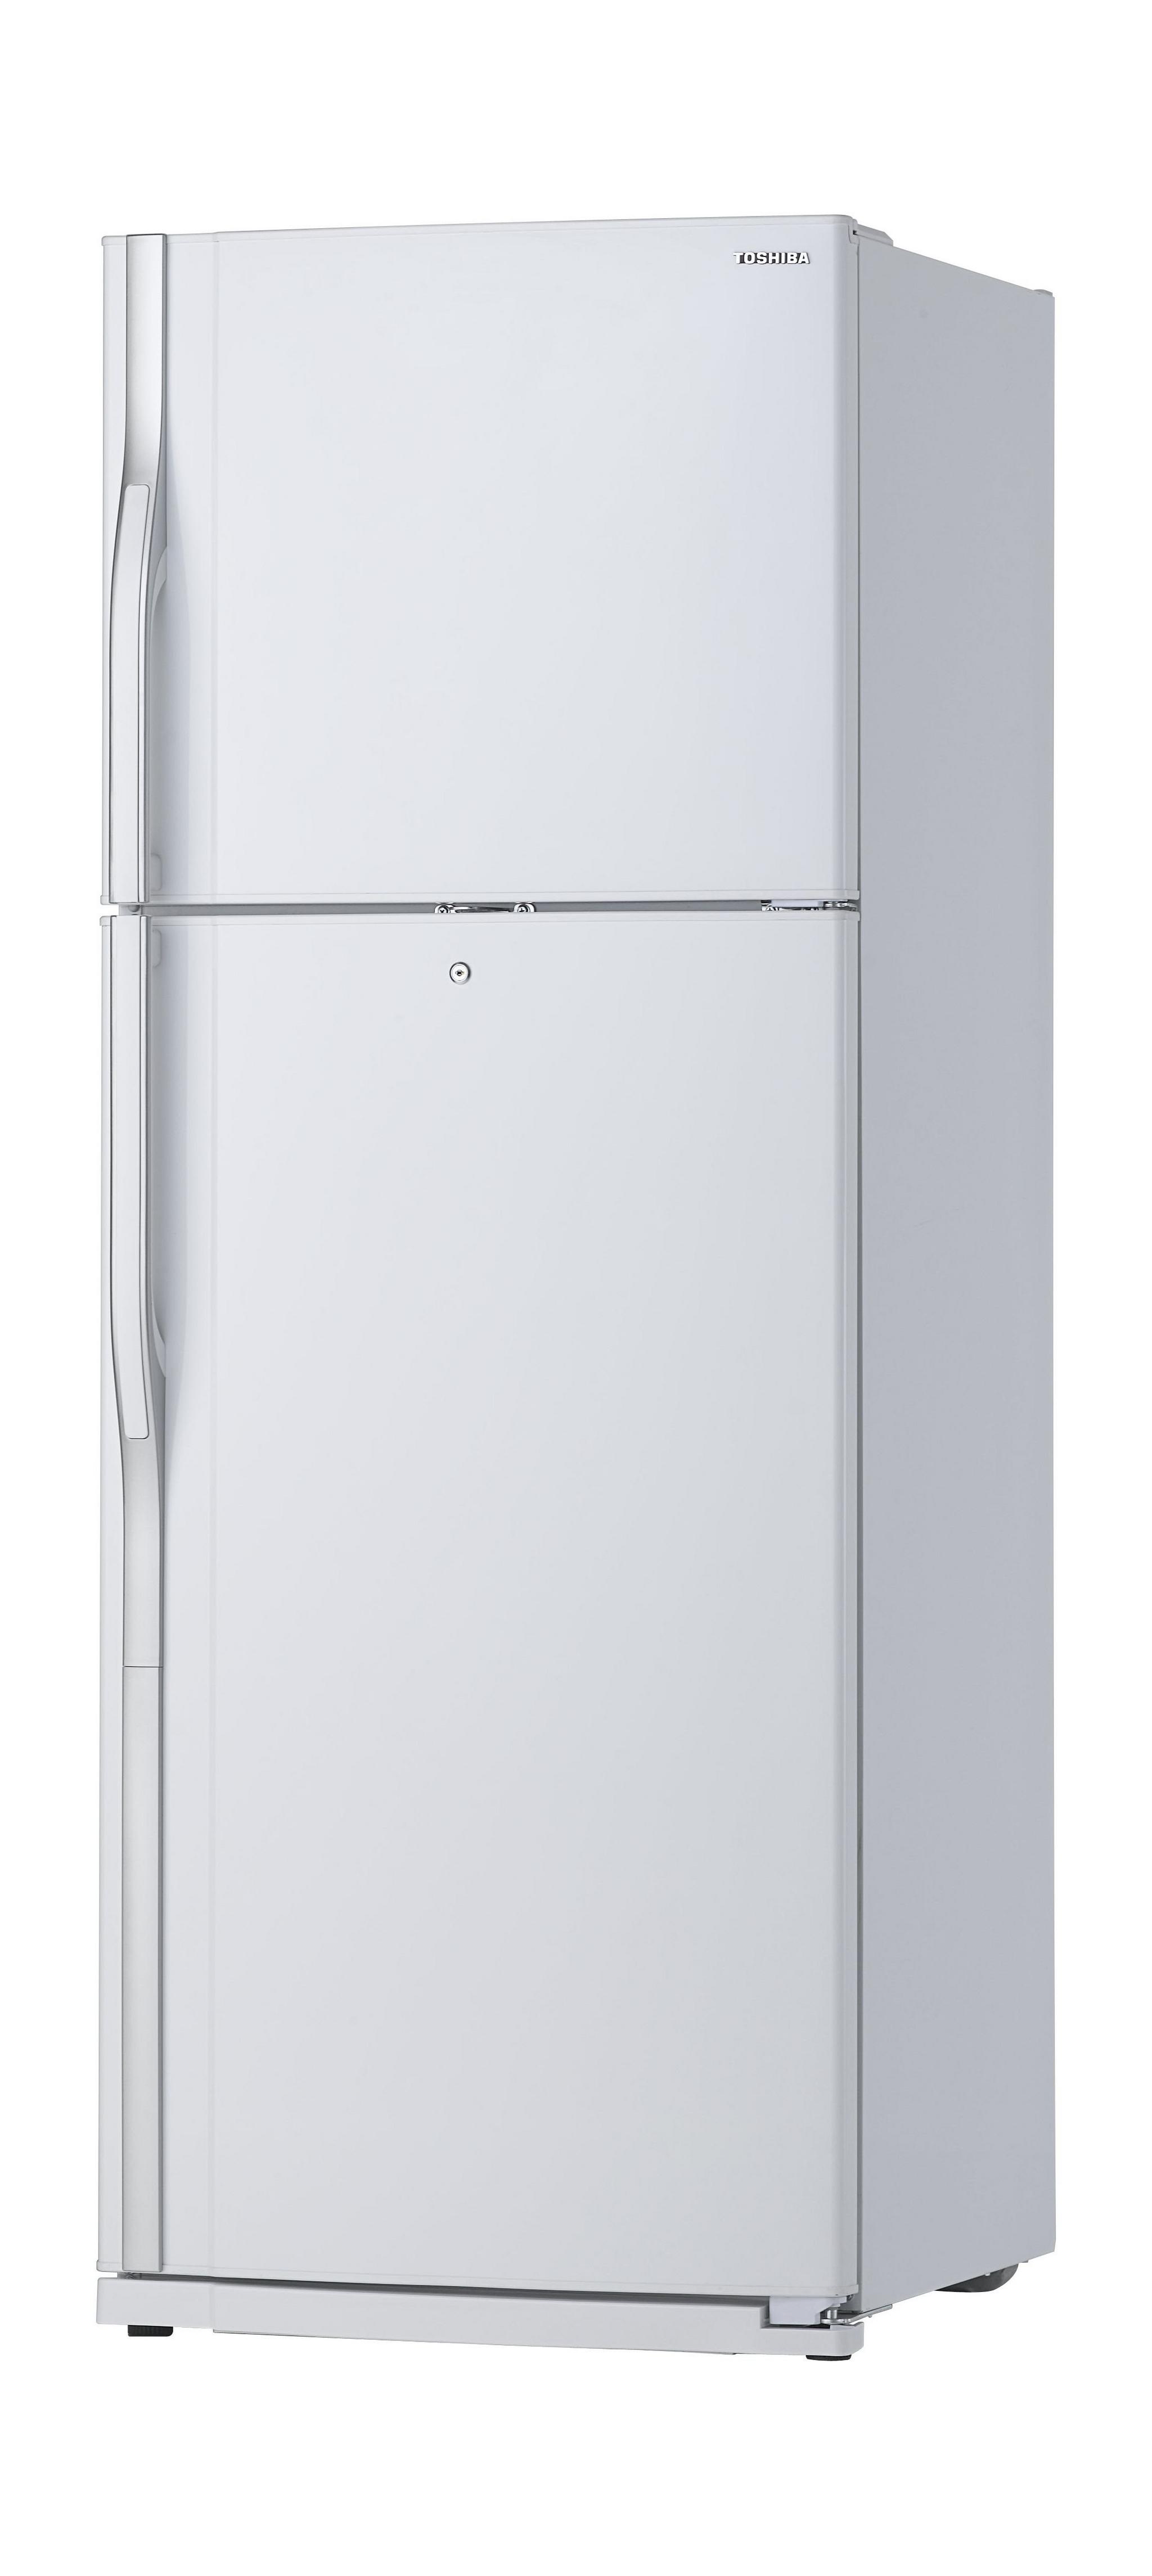 Toshiba 14 Cft. Top Freezer Refrigerator (GRR42UTKW) - White